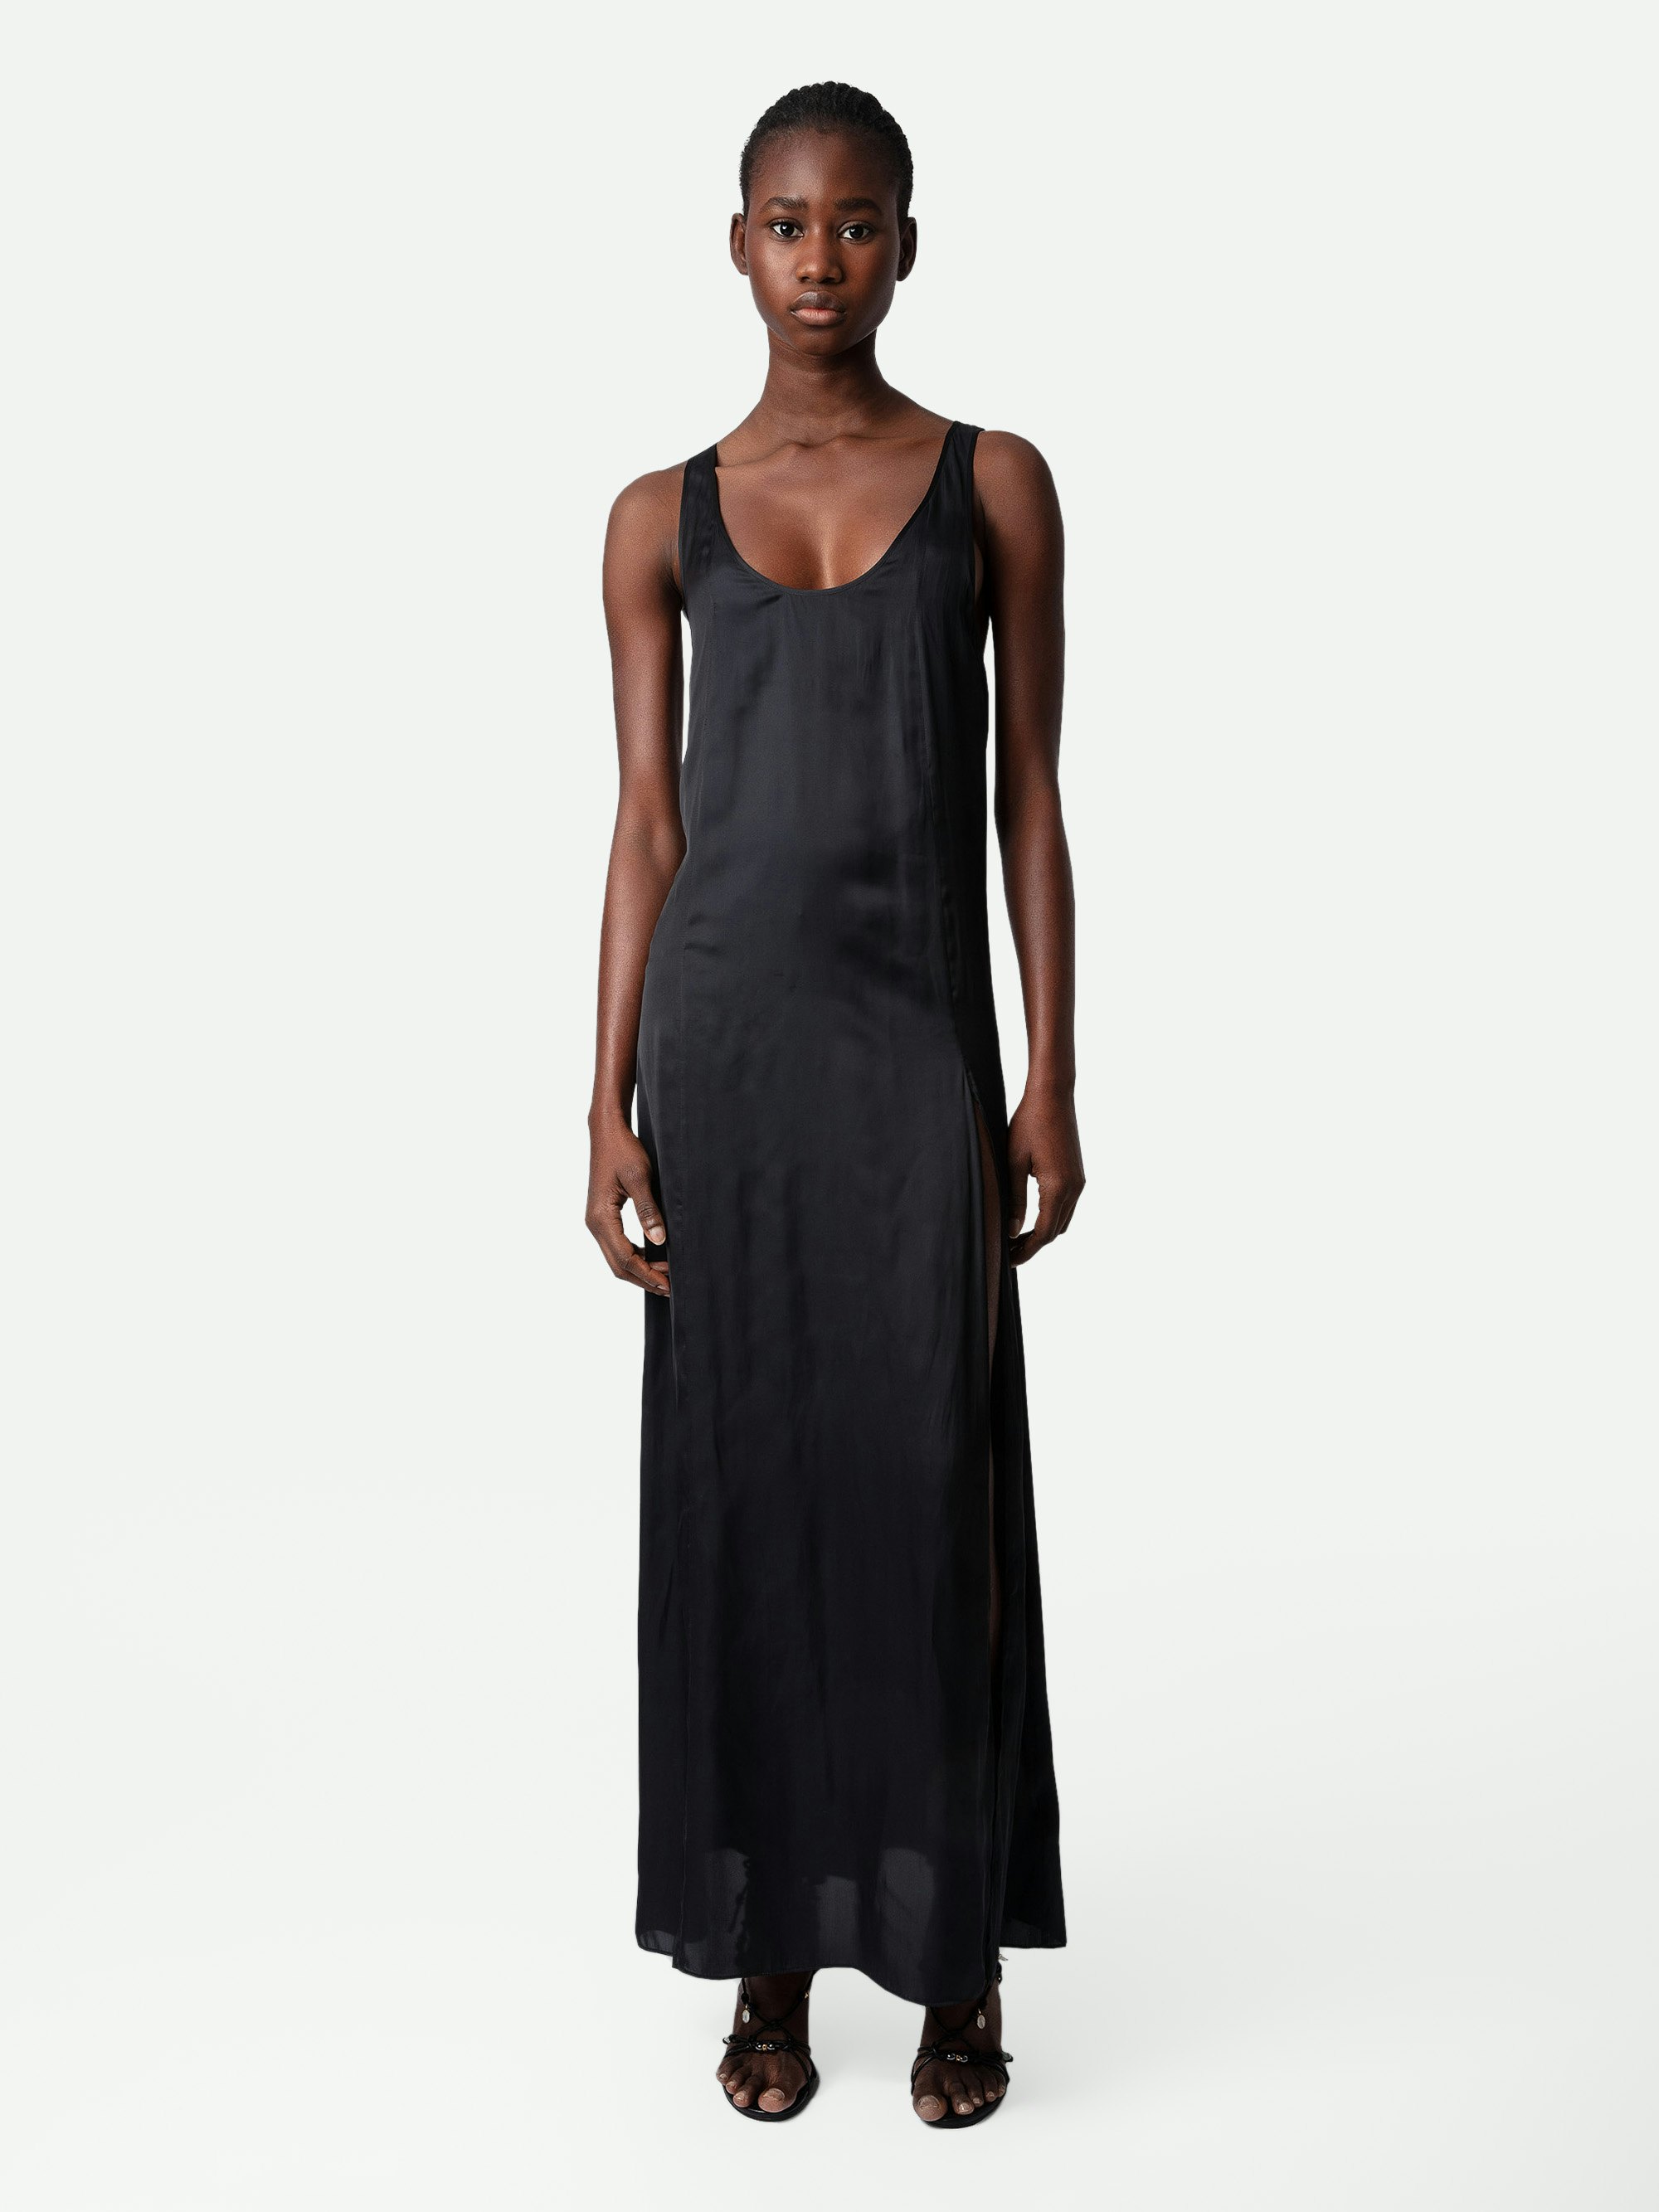 Rarys Satin Dress - Black satin long dress, split on the skirt and cutaway shoulders.